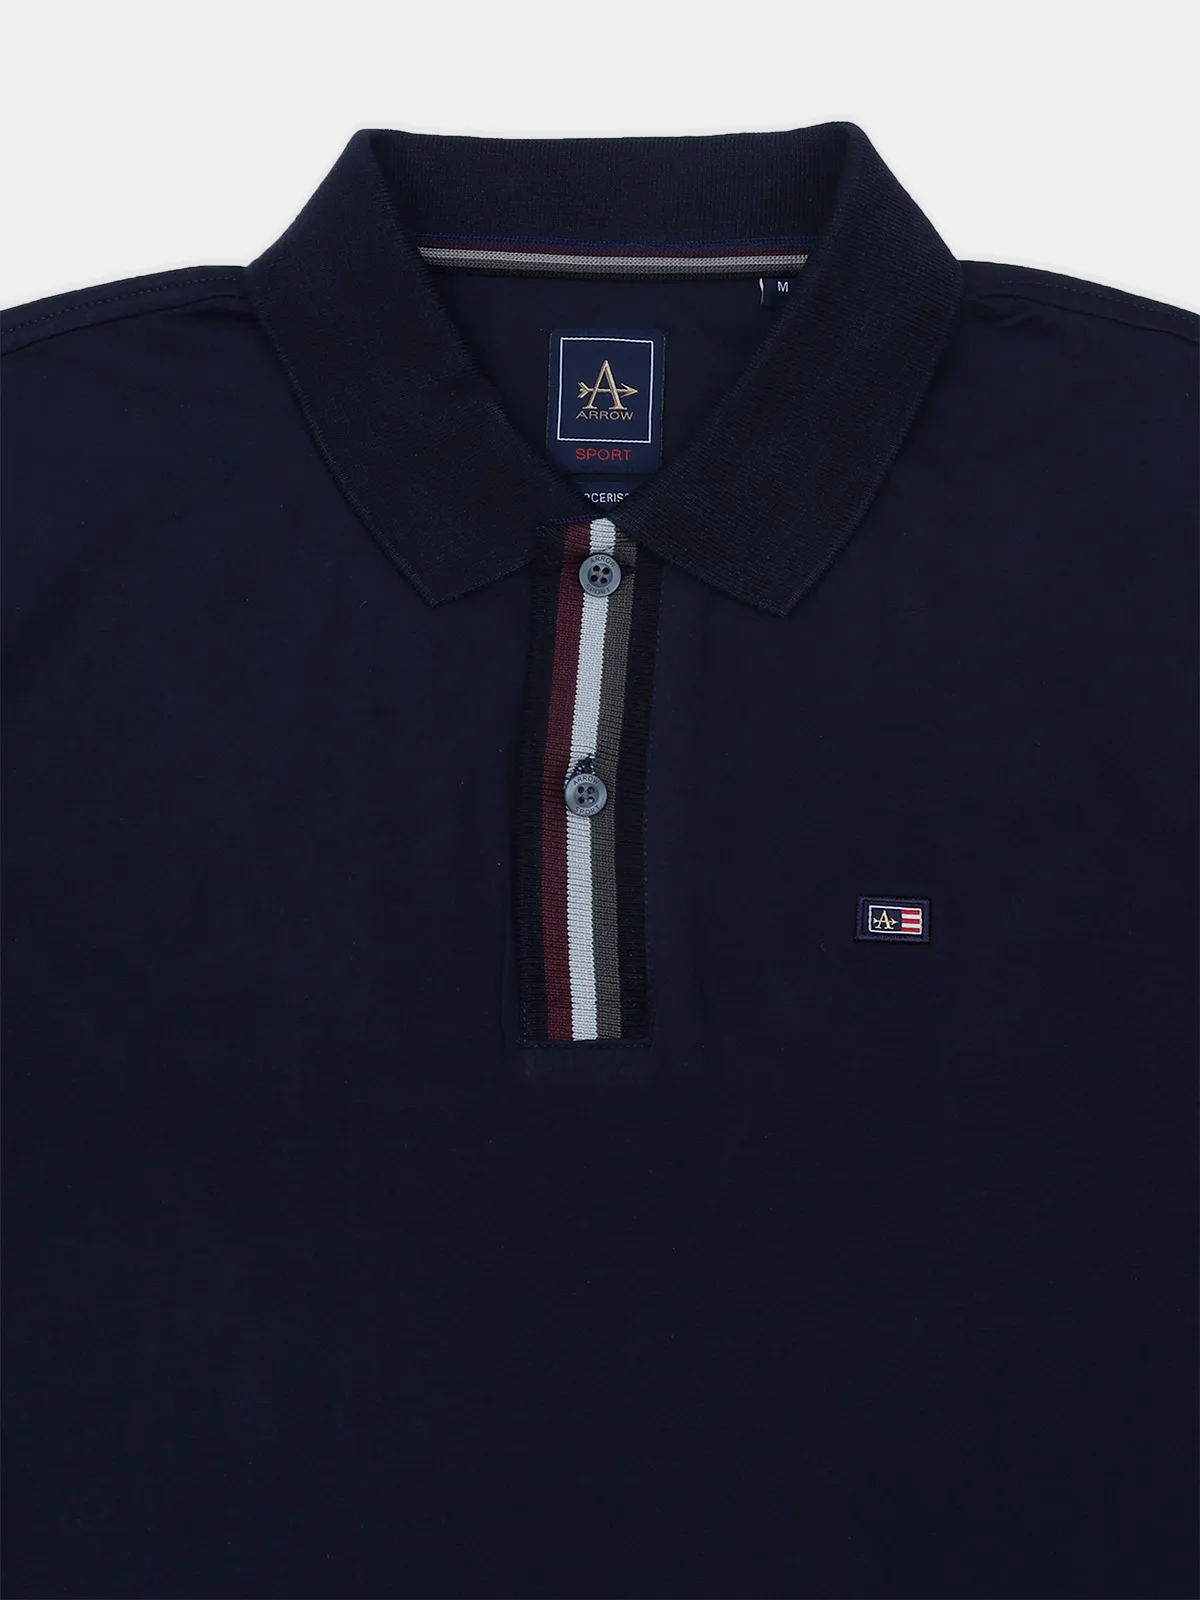 Arrow solid navy cotton regular fit t shirt